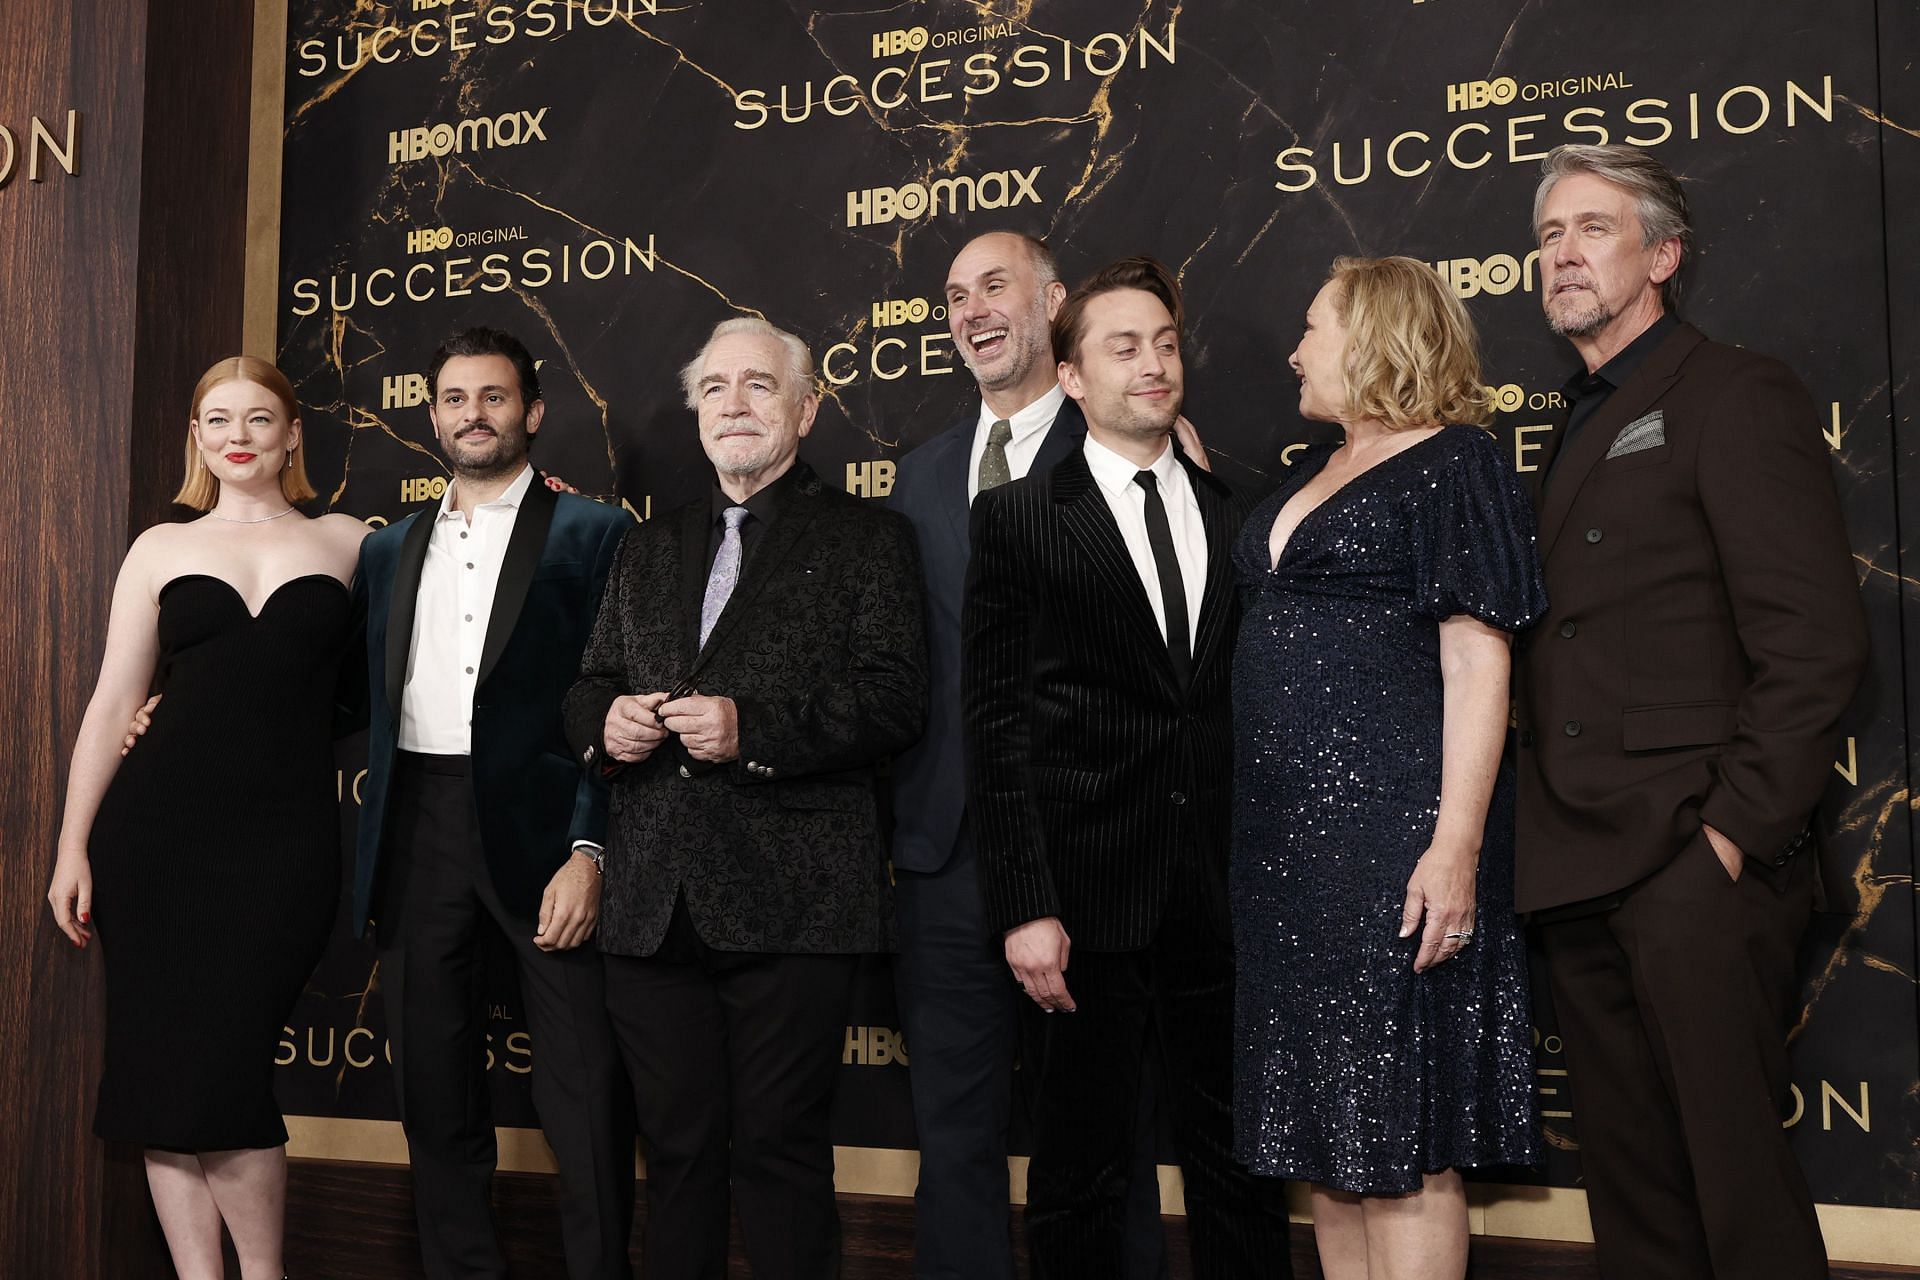 Succession cast at the premiere (Image via Getty Images)